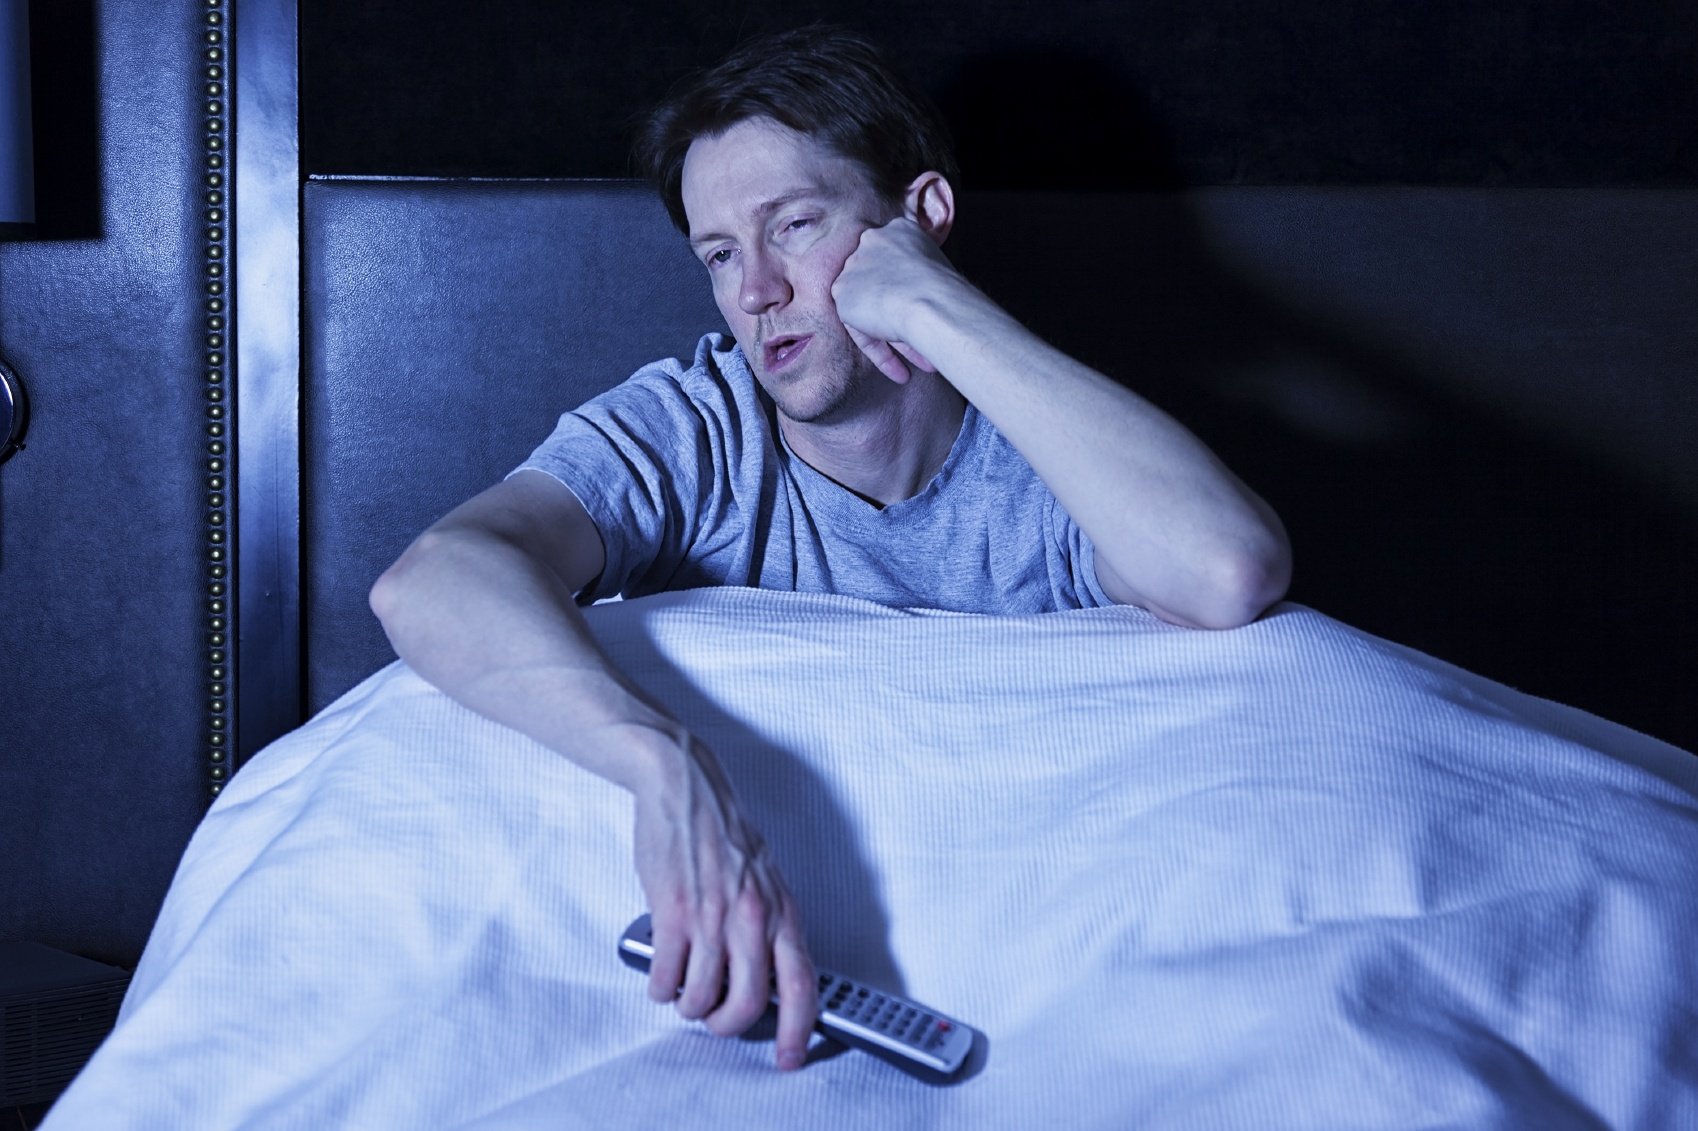 Learn how to battle sleepless nights